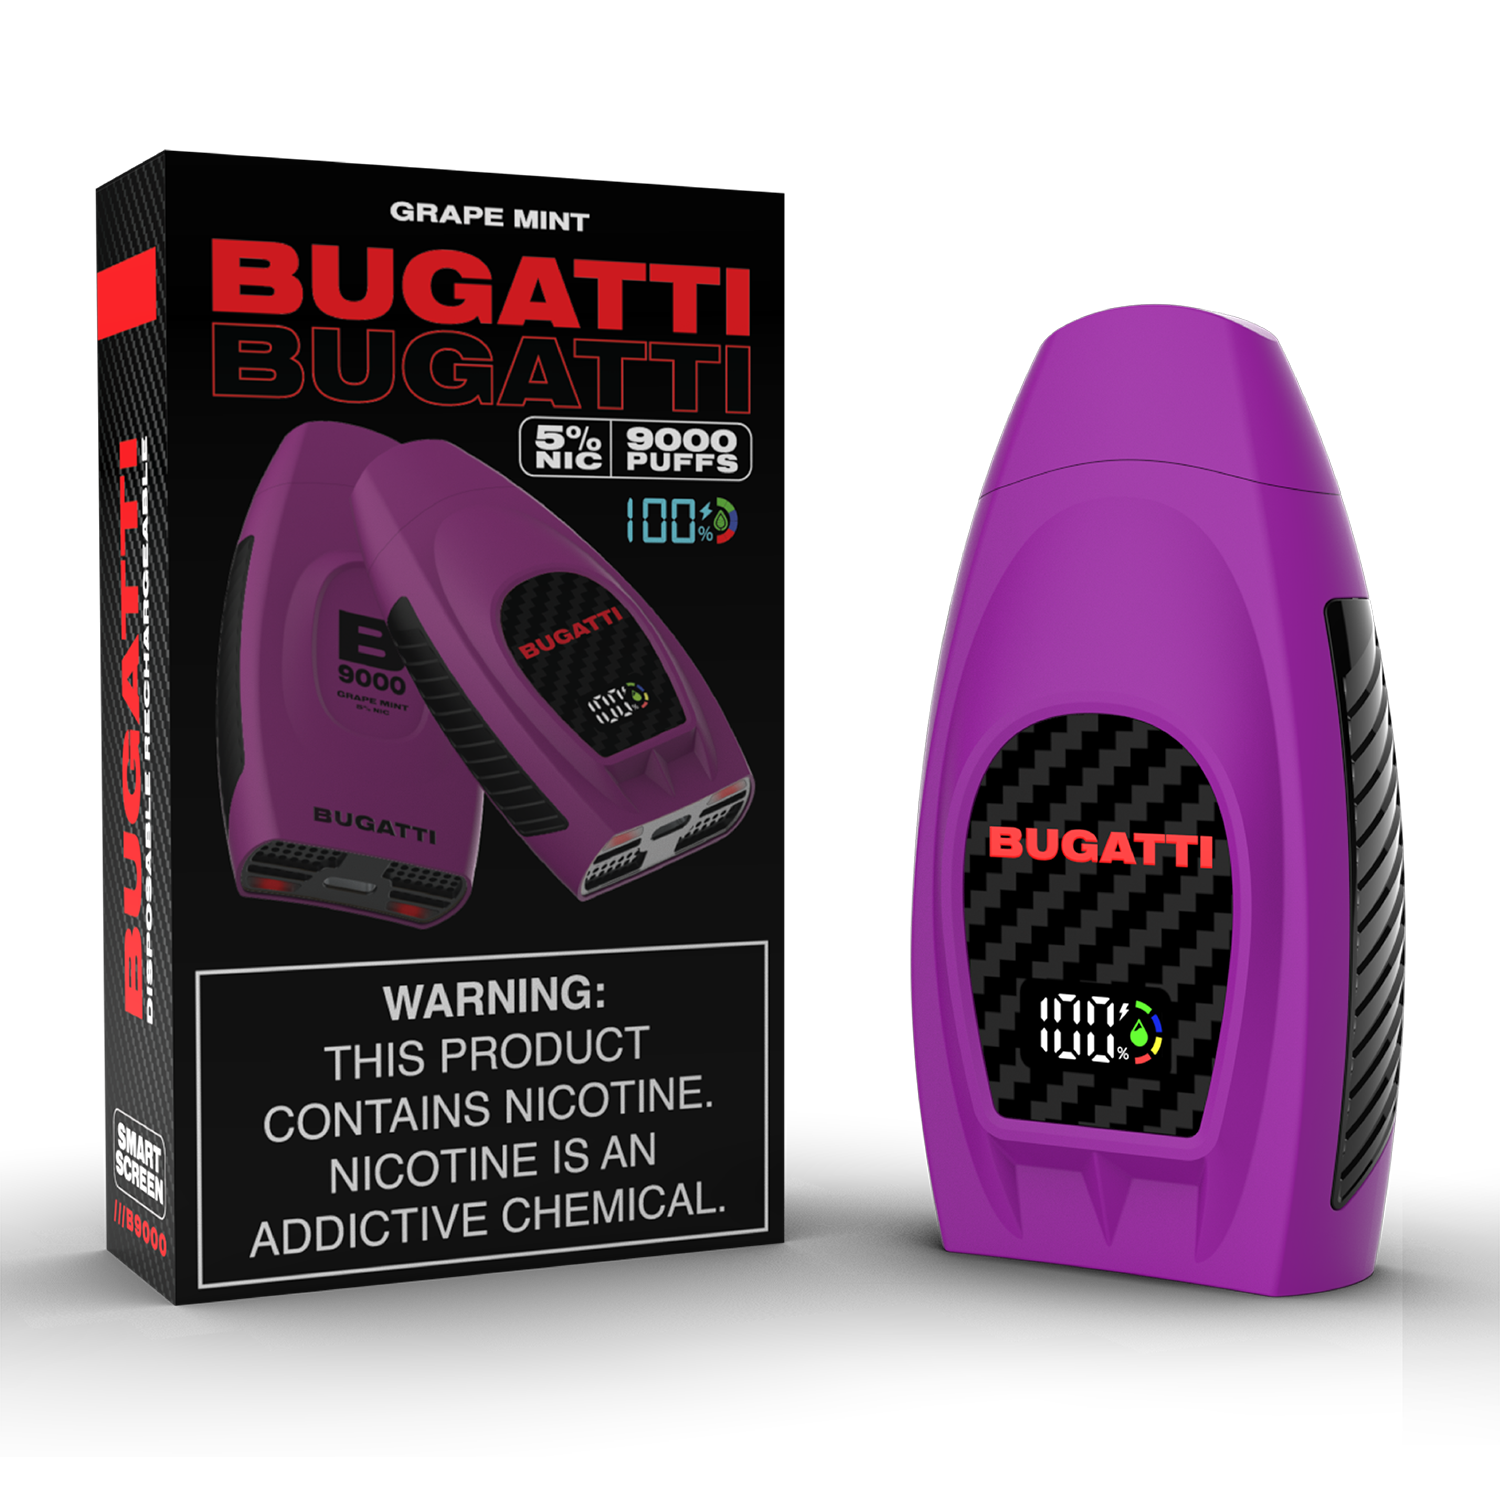 Bugatti 5% B2B